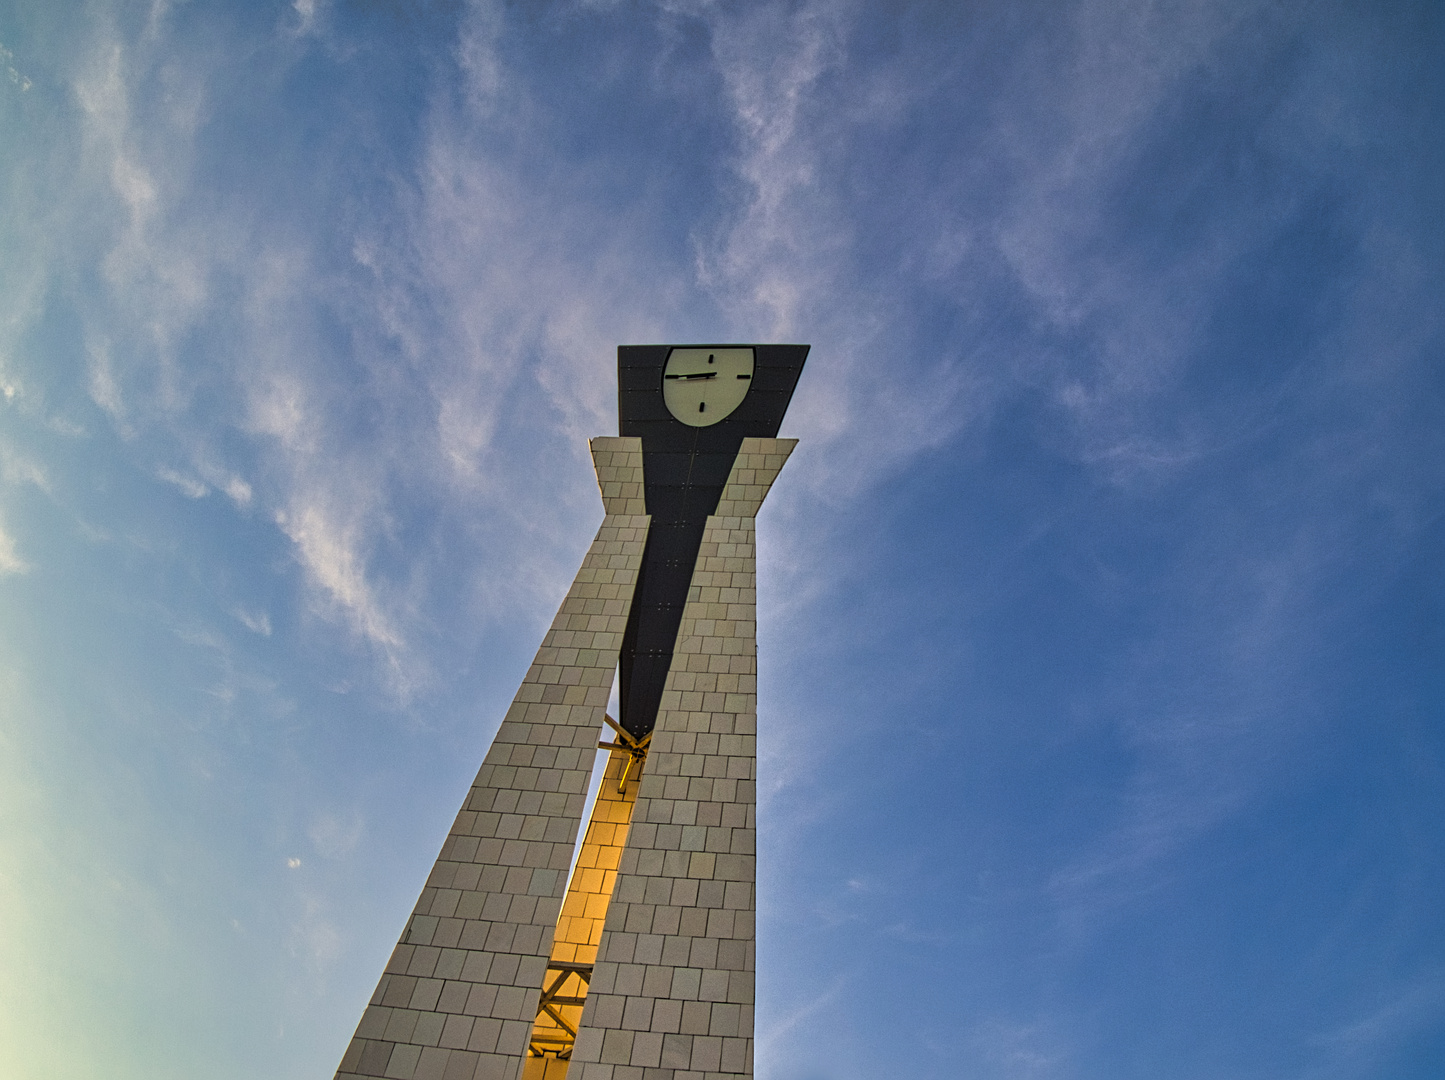 Monument "Kazakhstanskoye Solntse"